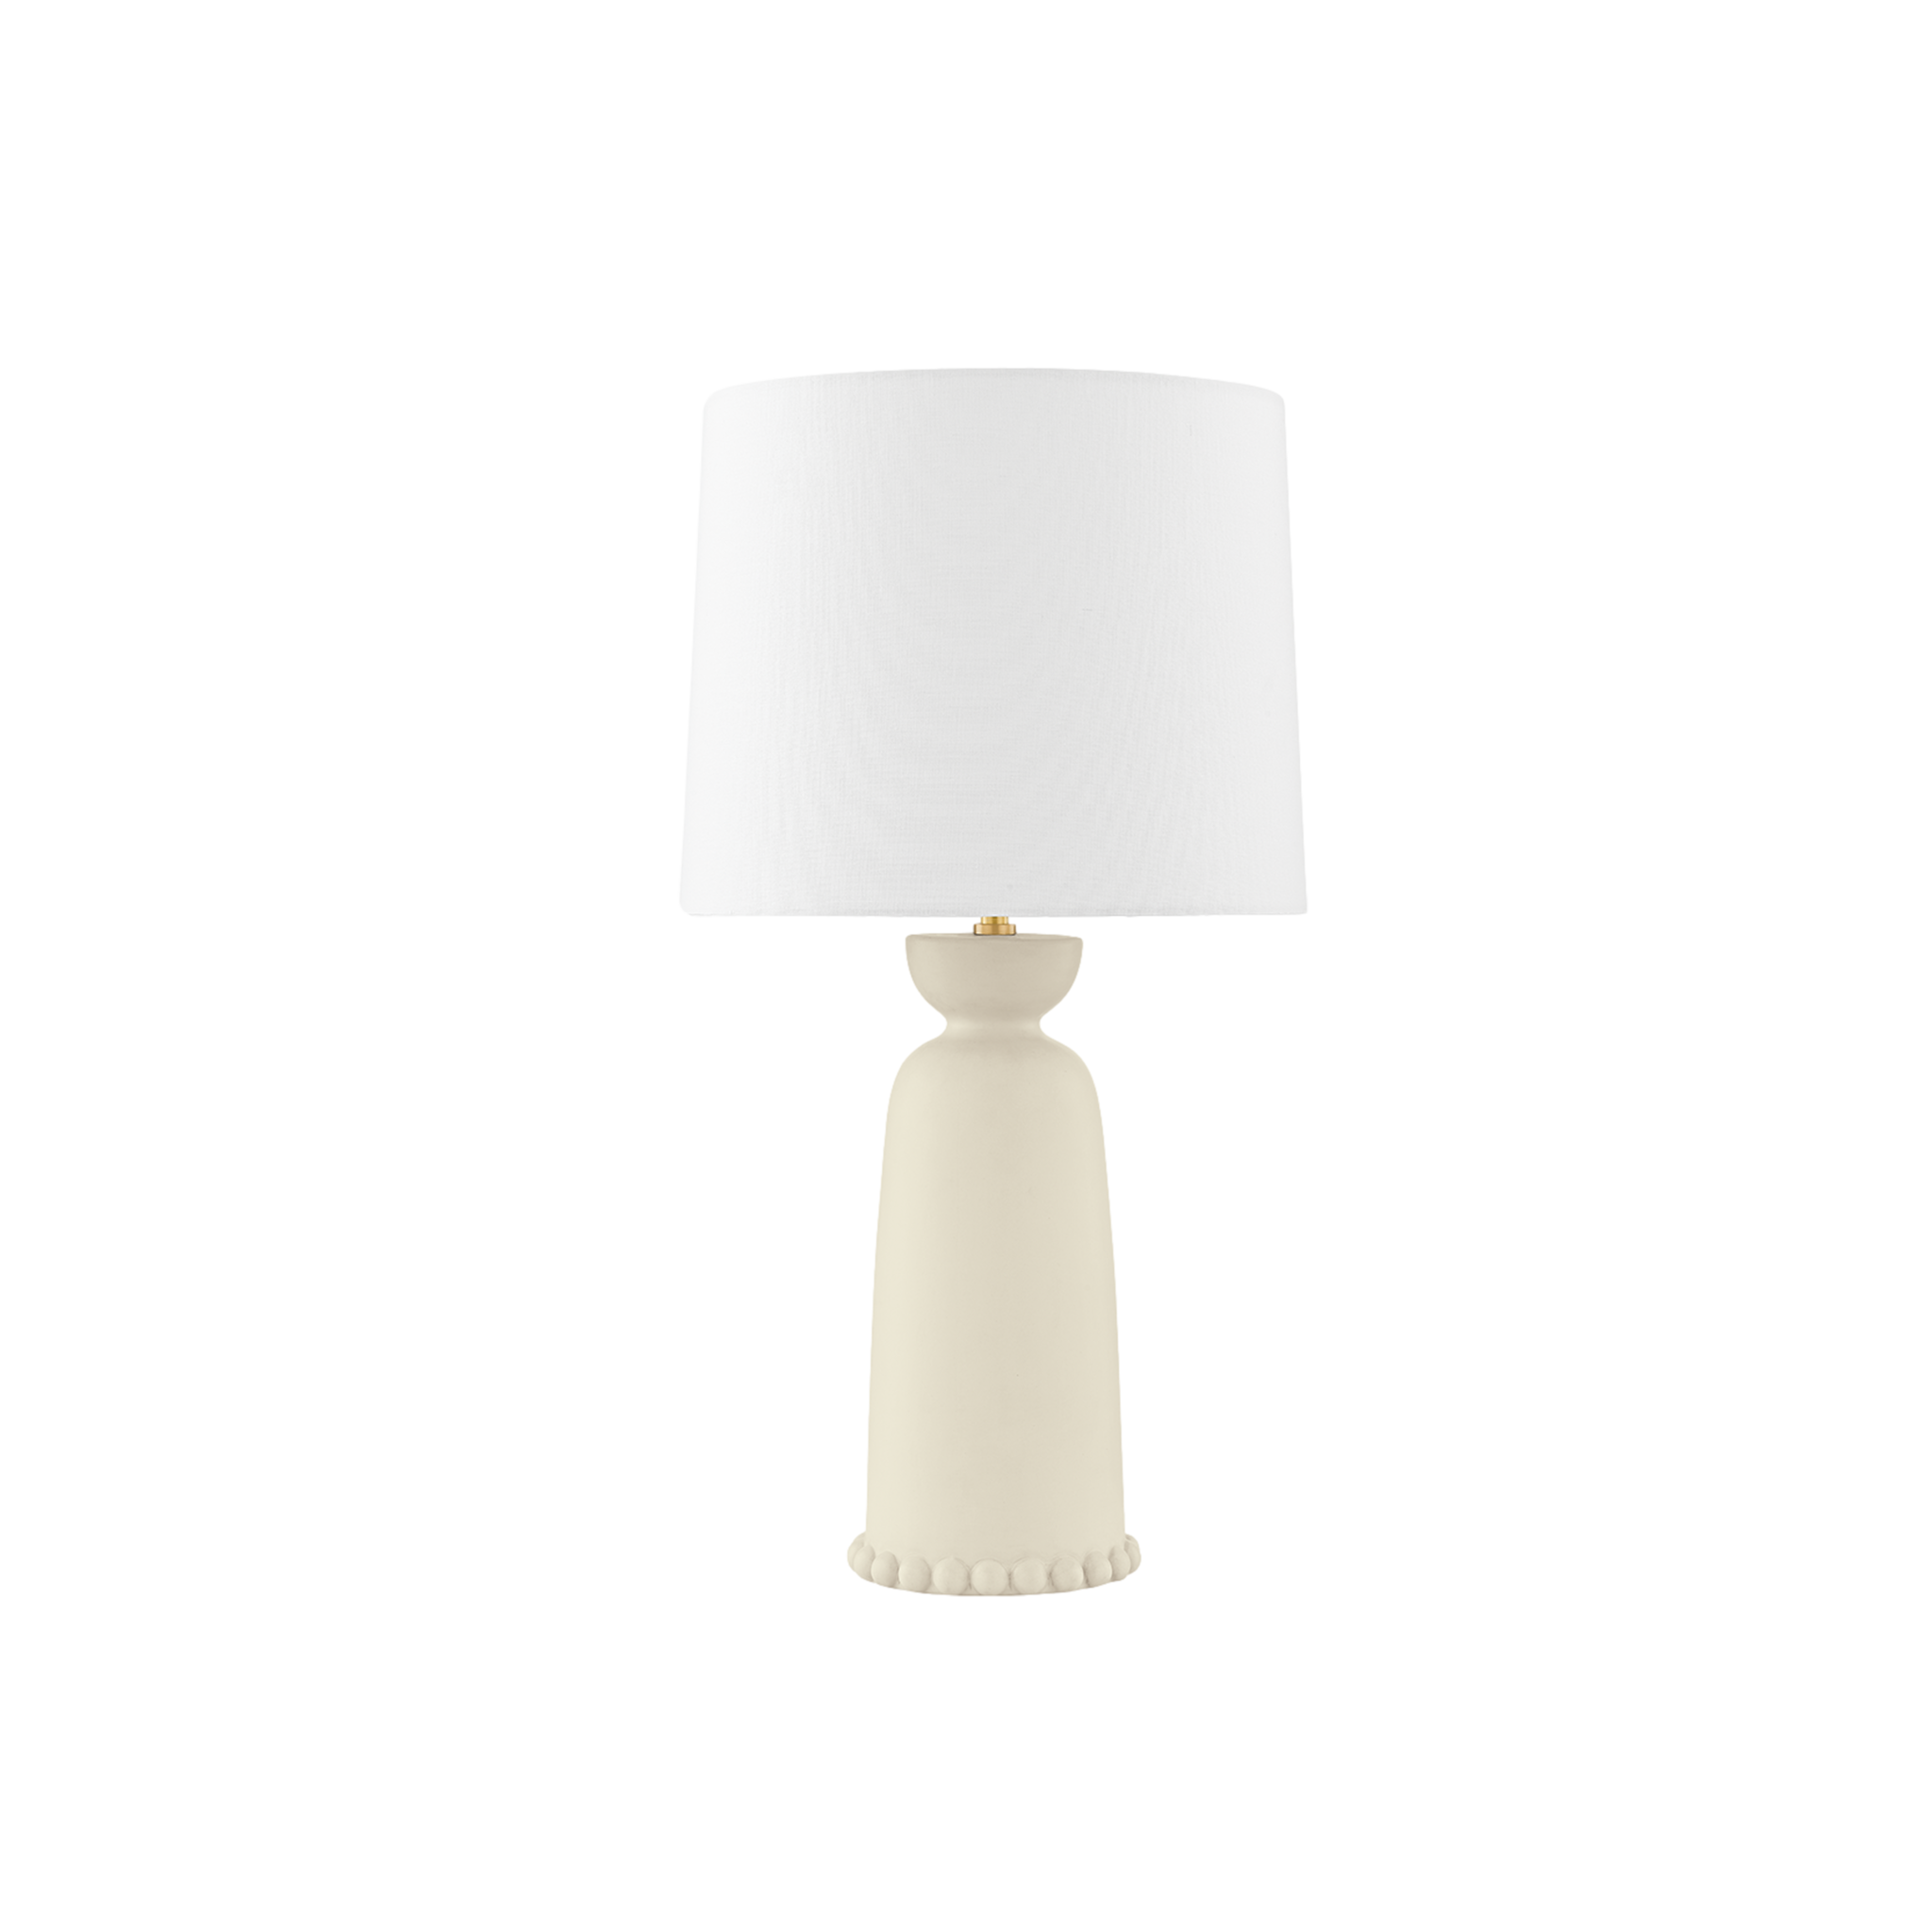 Rhea Table Lamp